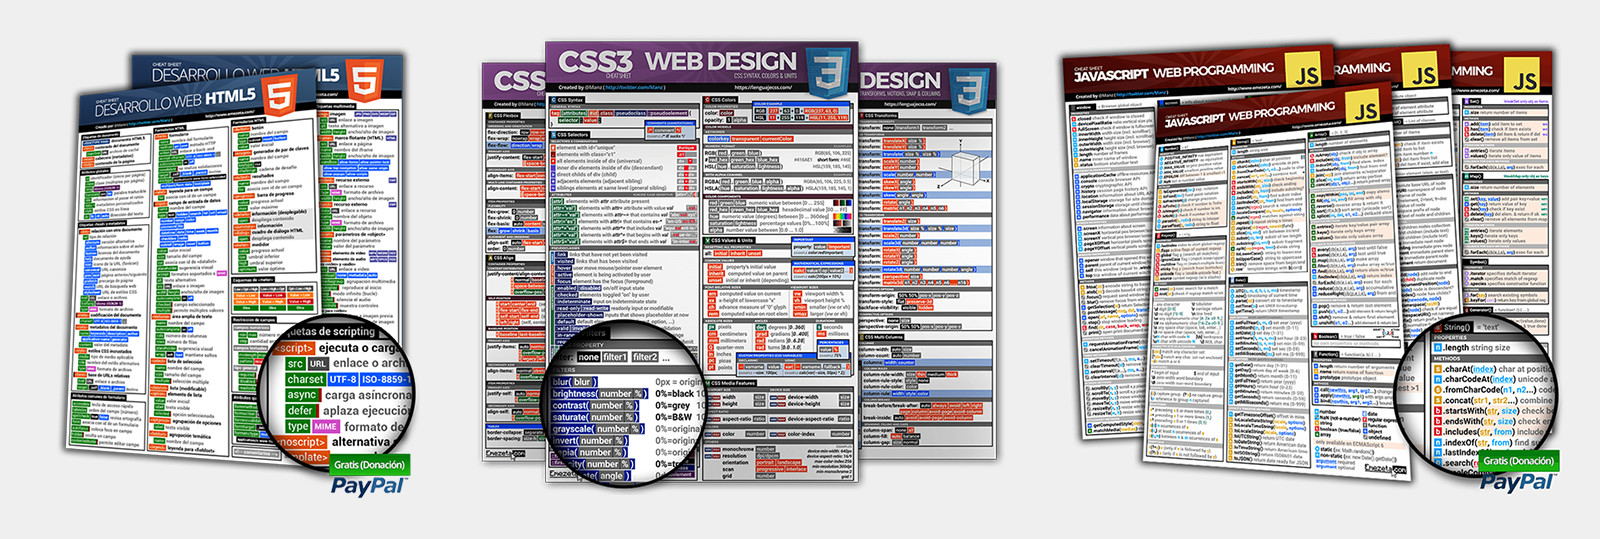 HTML5 CSS3 & Javascript CHEATSHEETS